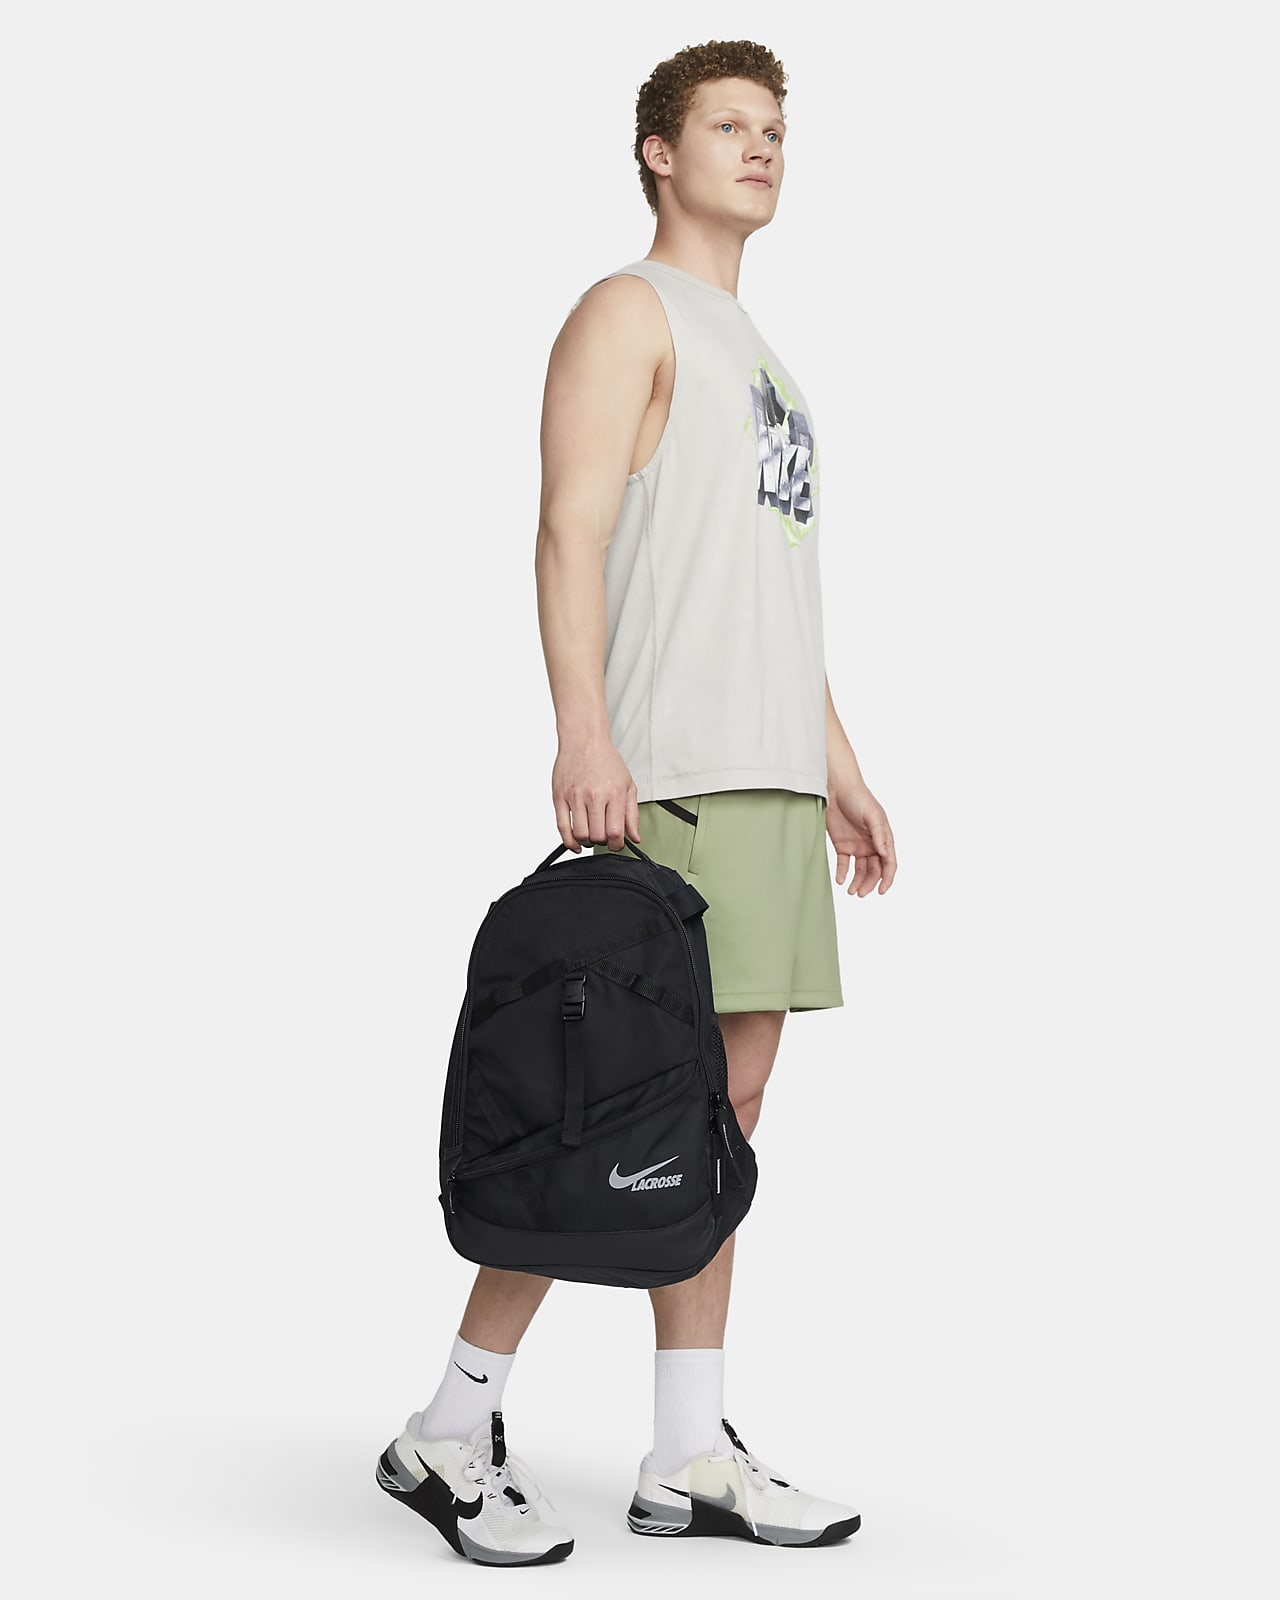 Nike Air Jordan Regal Air Backpack (One Size, White)– backpacks4less.com